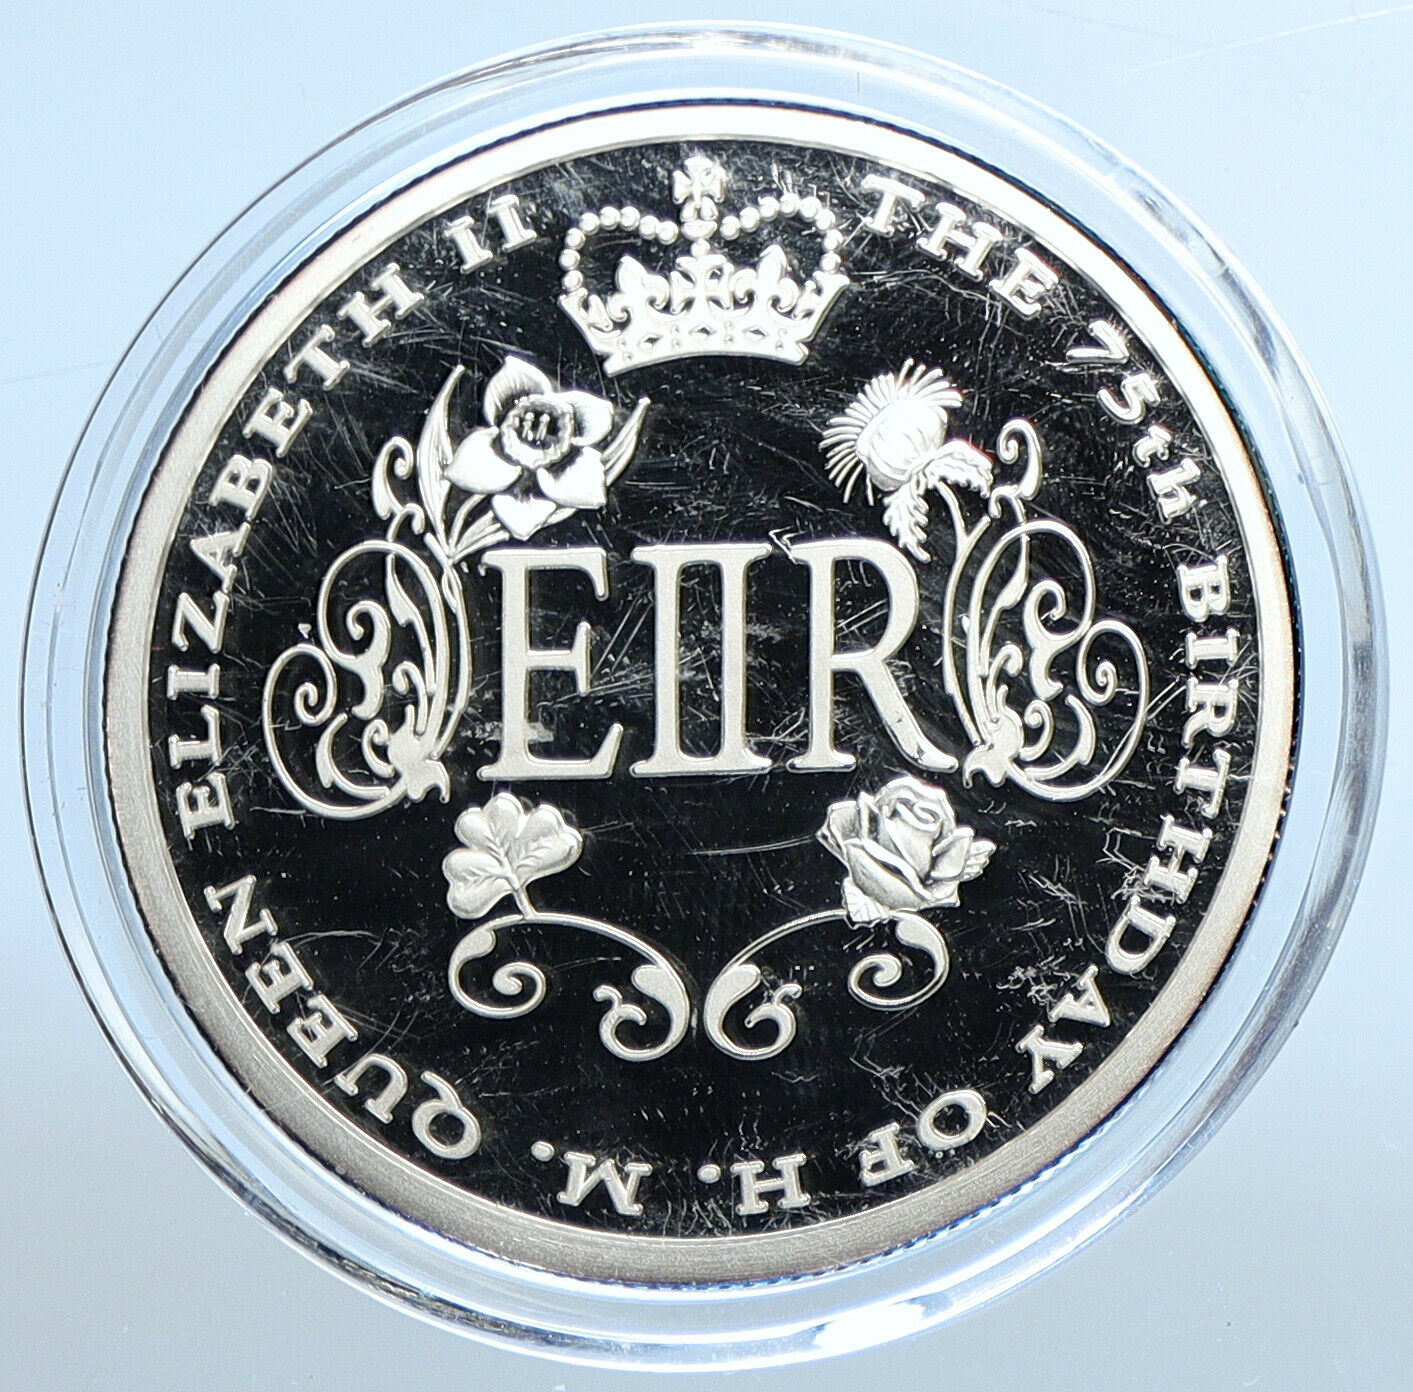 2001 LIBERIA UK Queen Elizabeth II 75th Birthday Proof Silver $10 Coin i111325